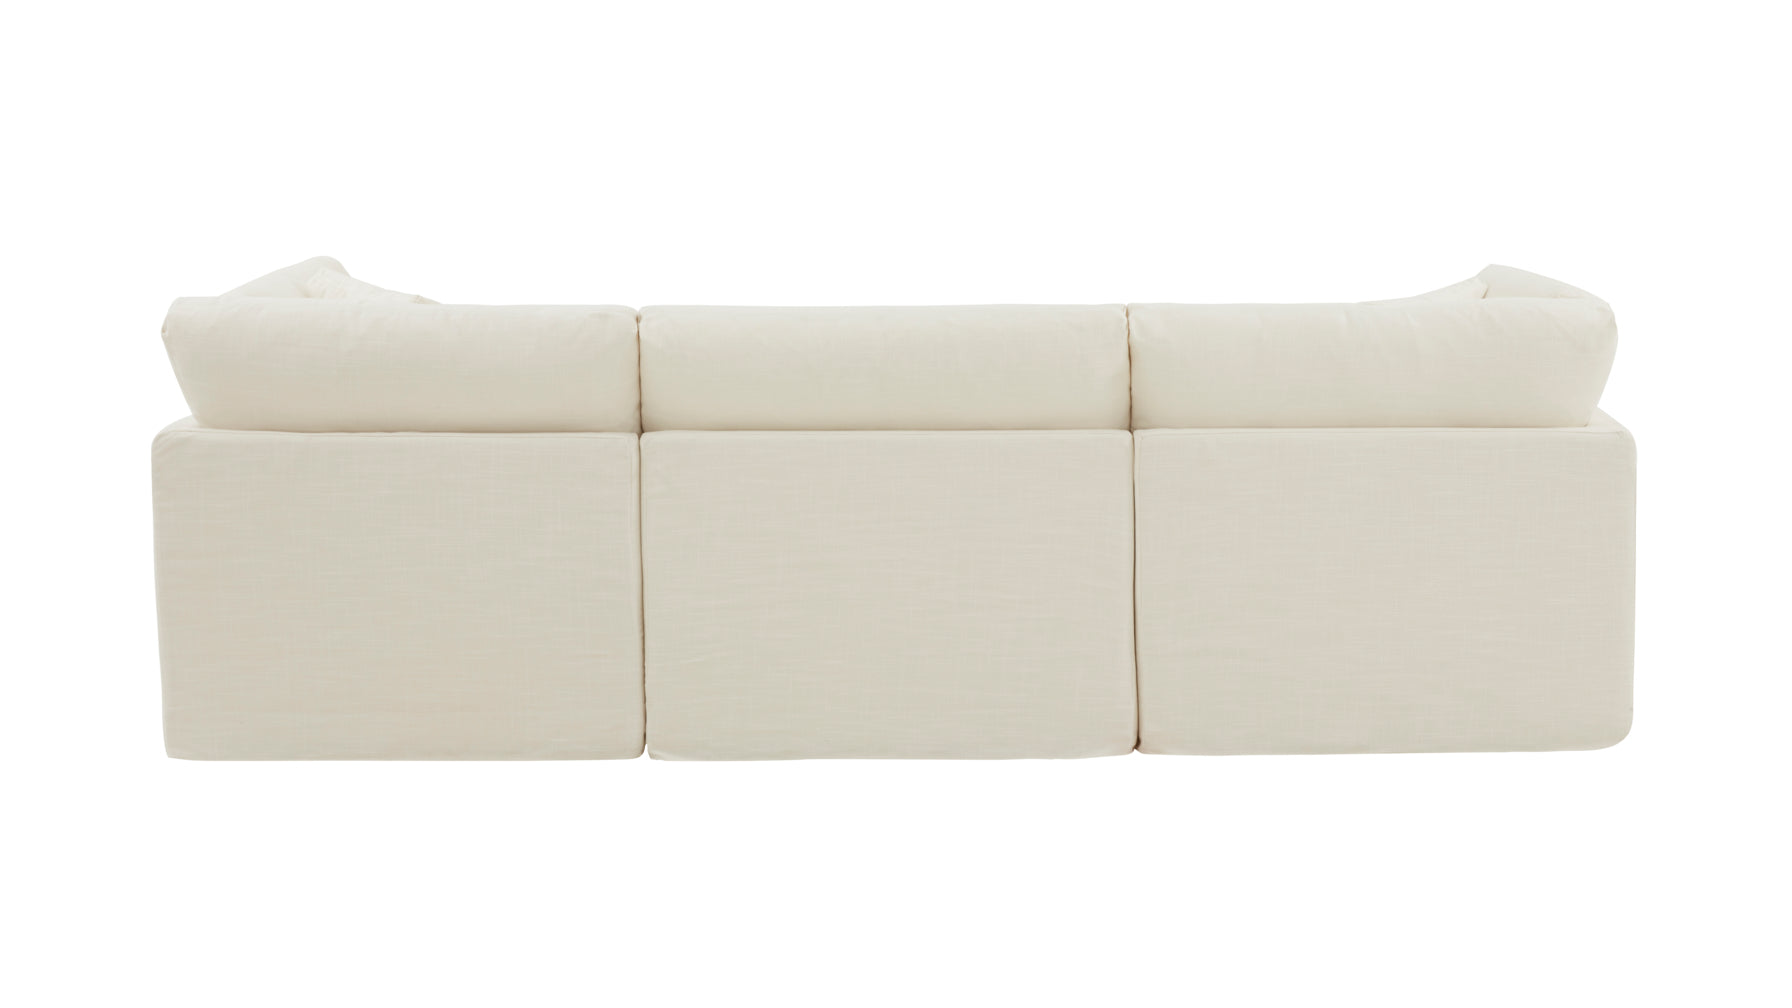 Get Together™ 3-Piece Modular Sofa, Standard, Cream Linen - Image 3